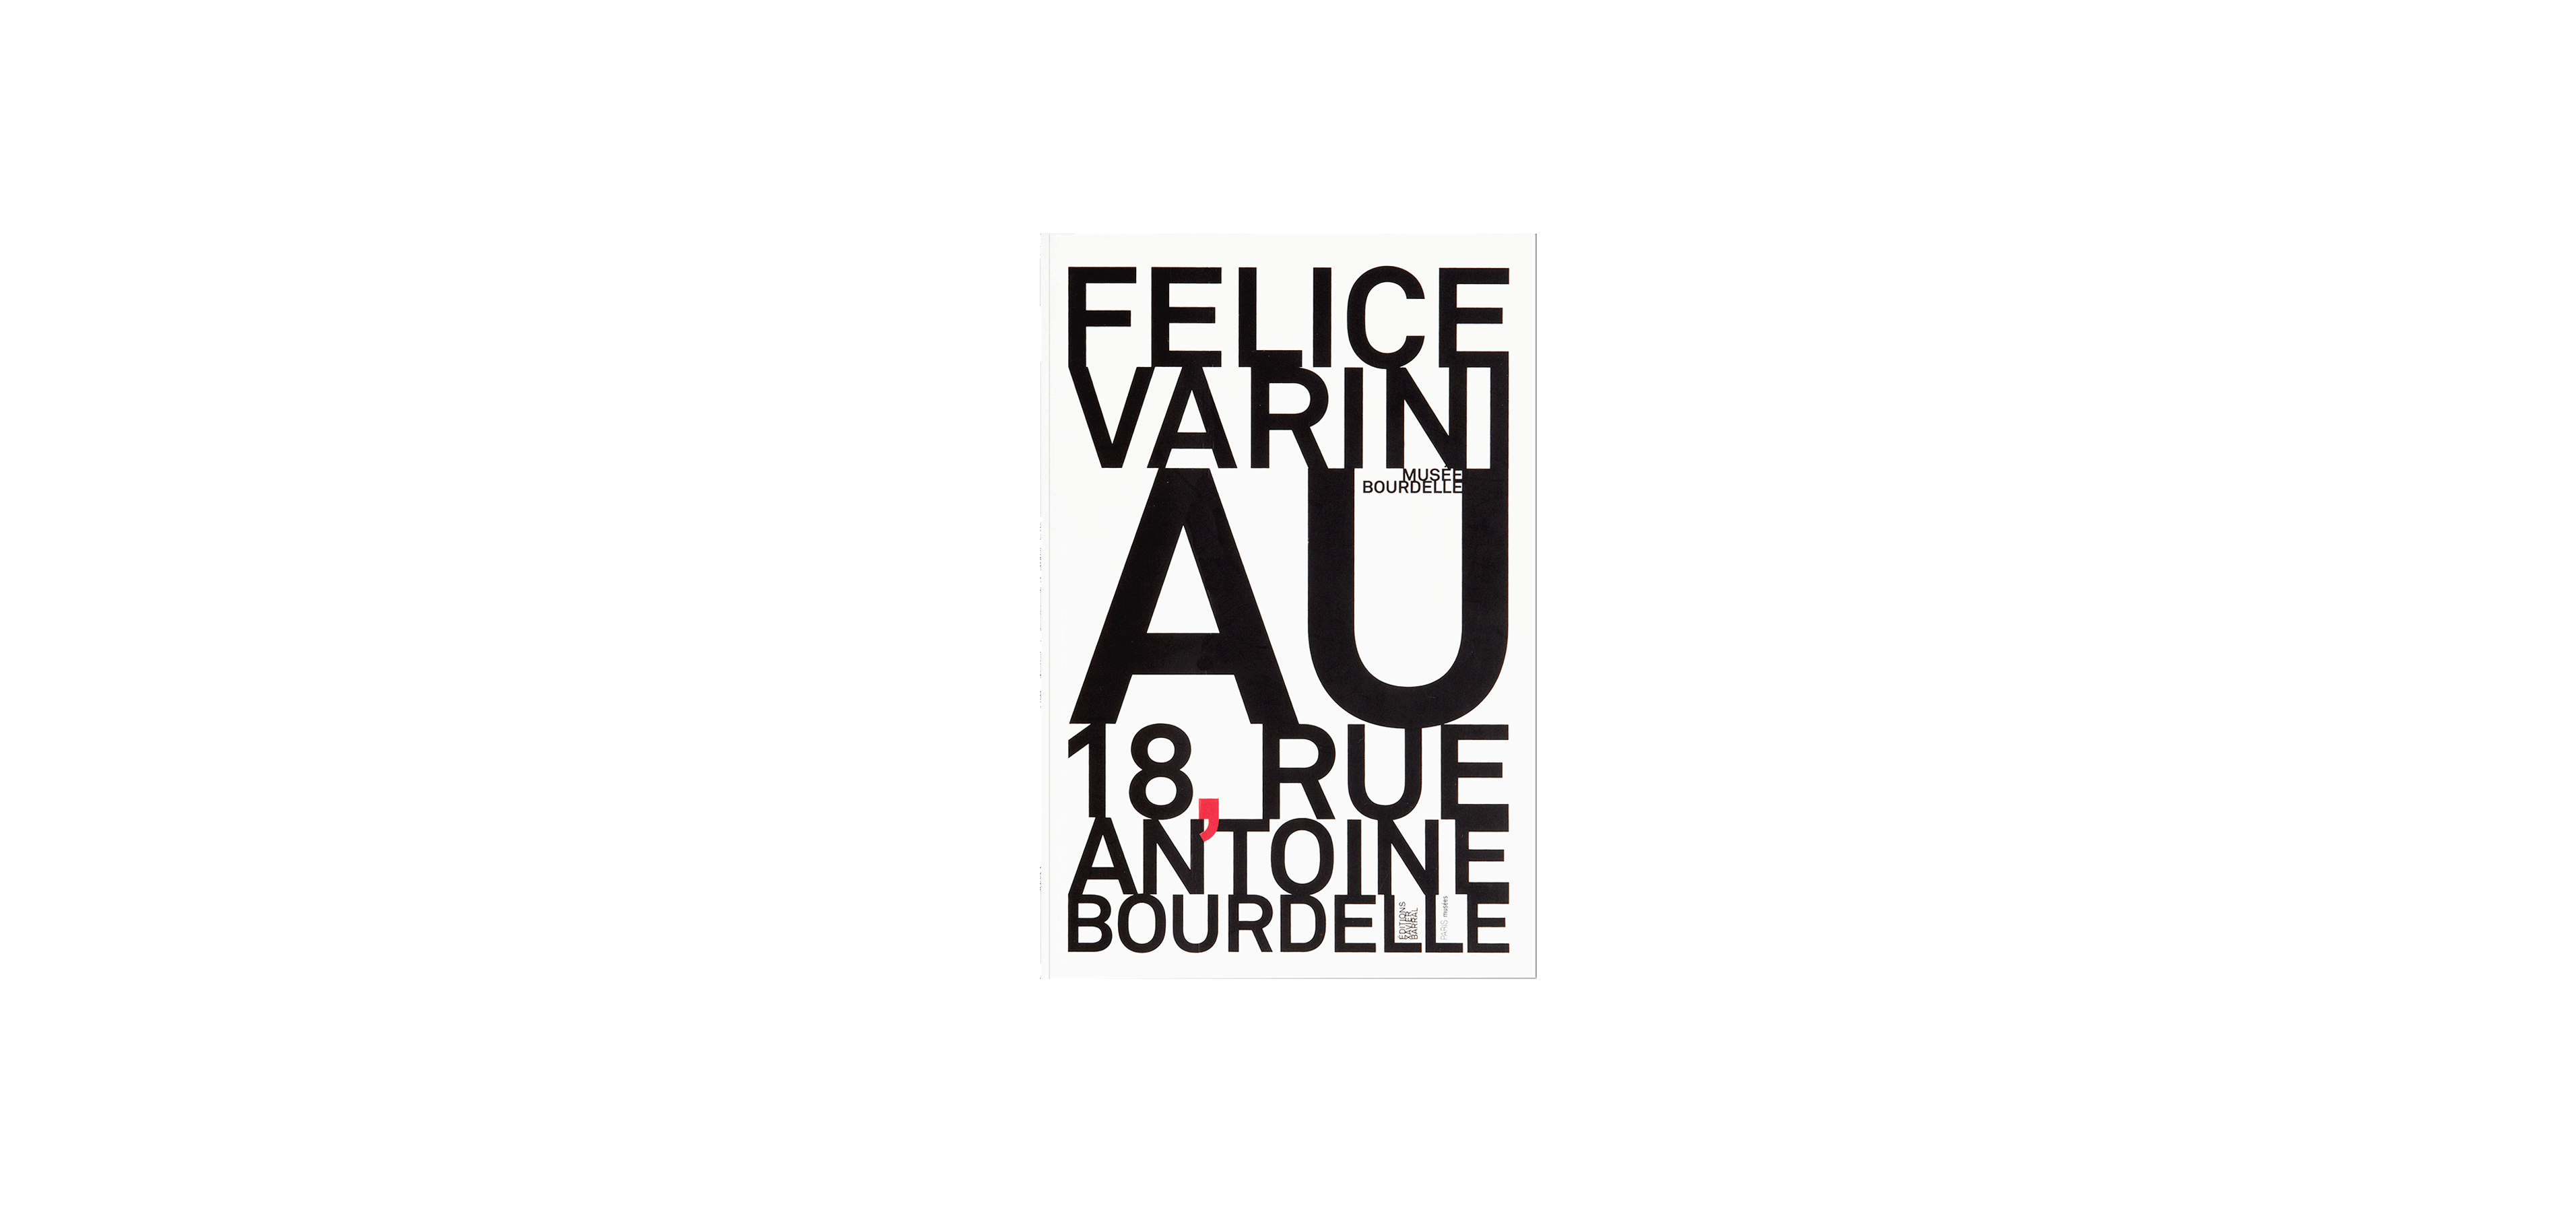 Felice Varini au 18, rue Antoine Bourdelle 